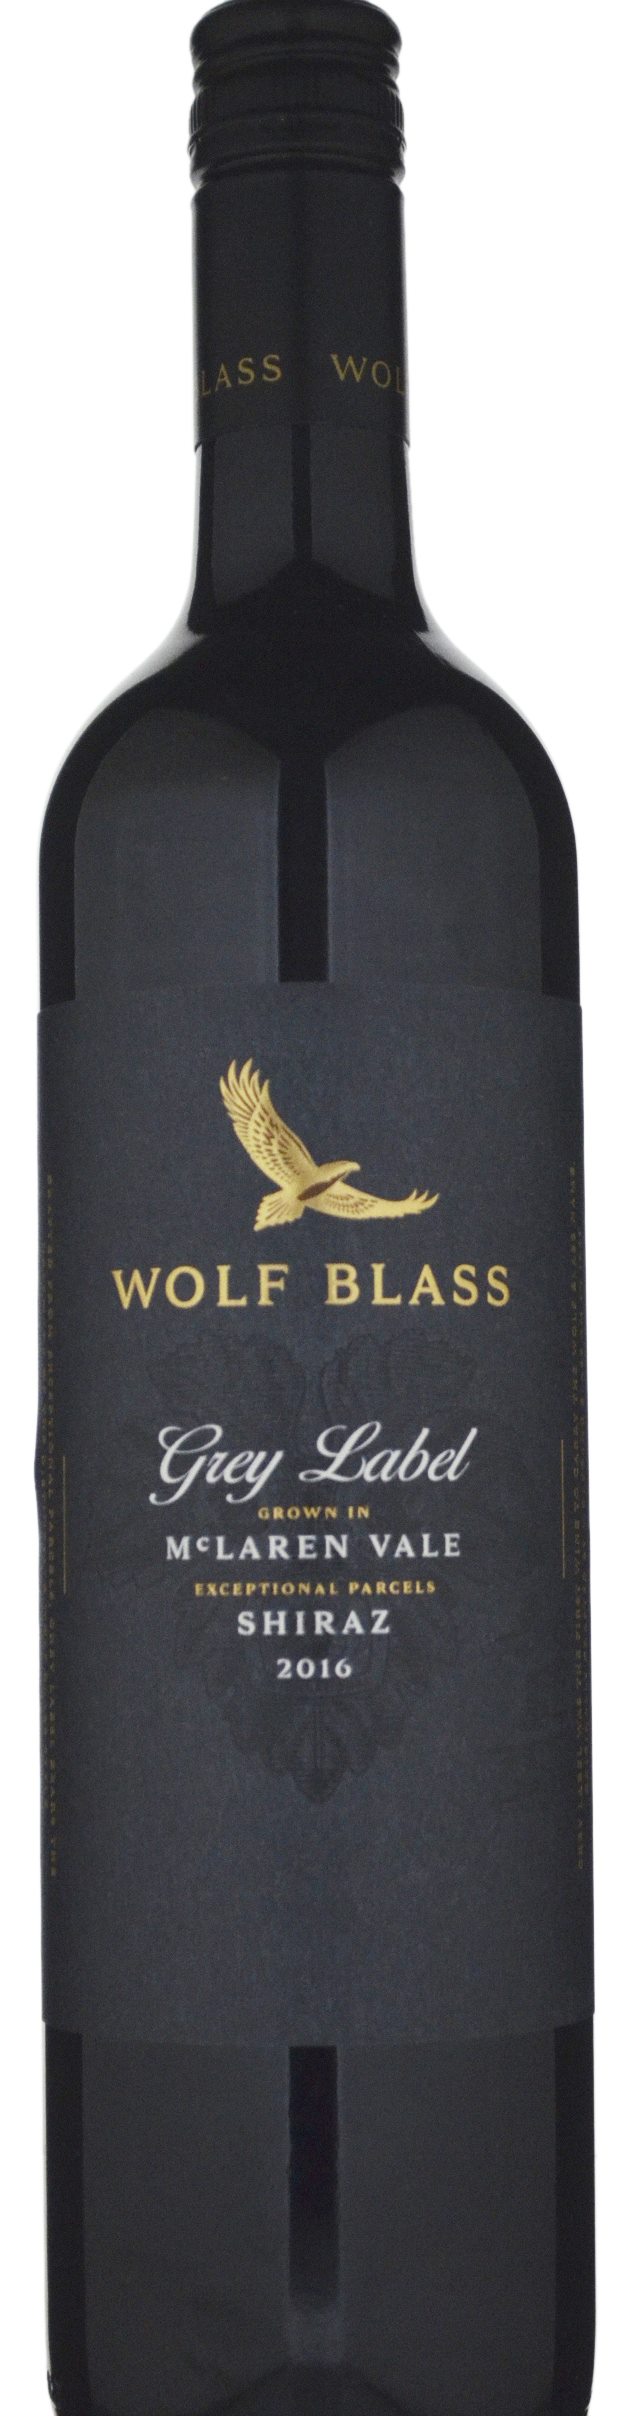 wolf blass grey label shiraz 2014 review